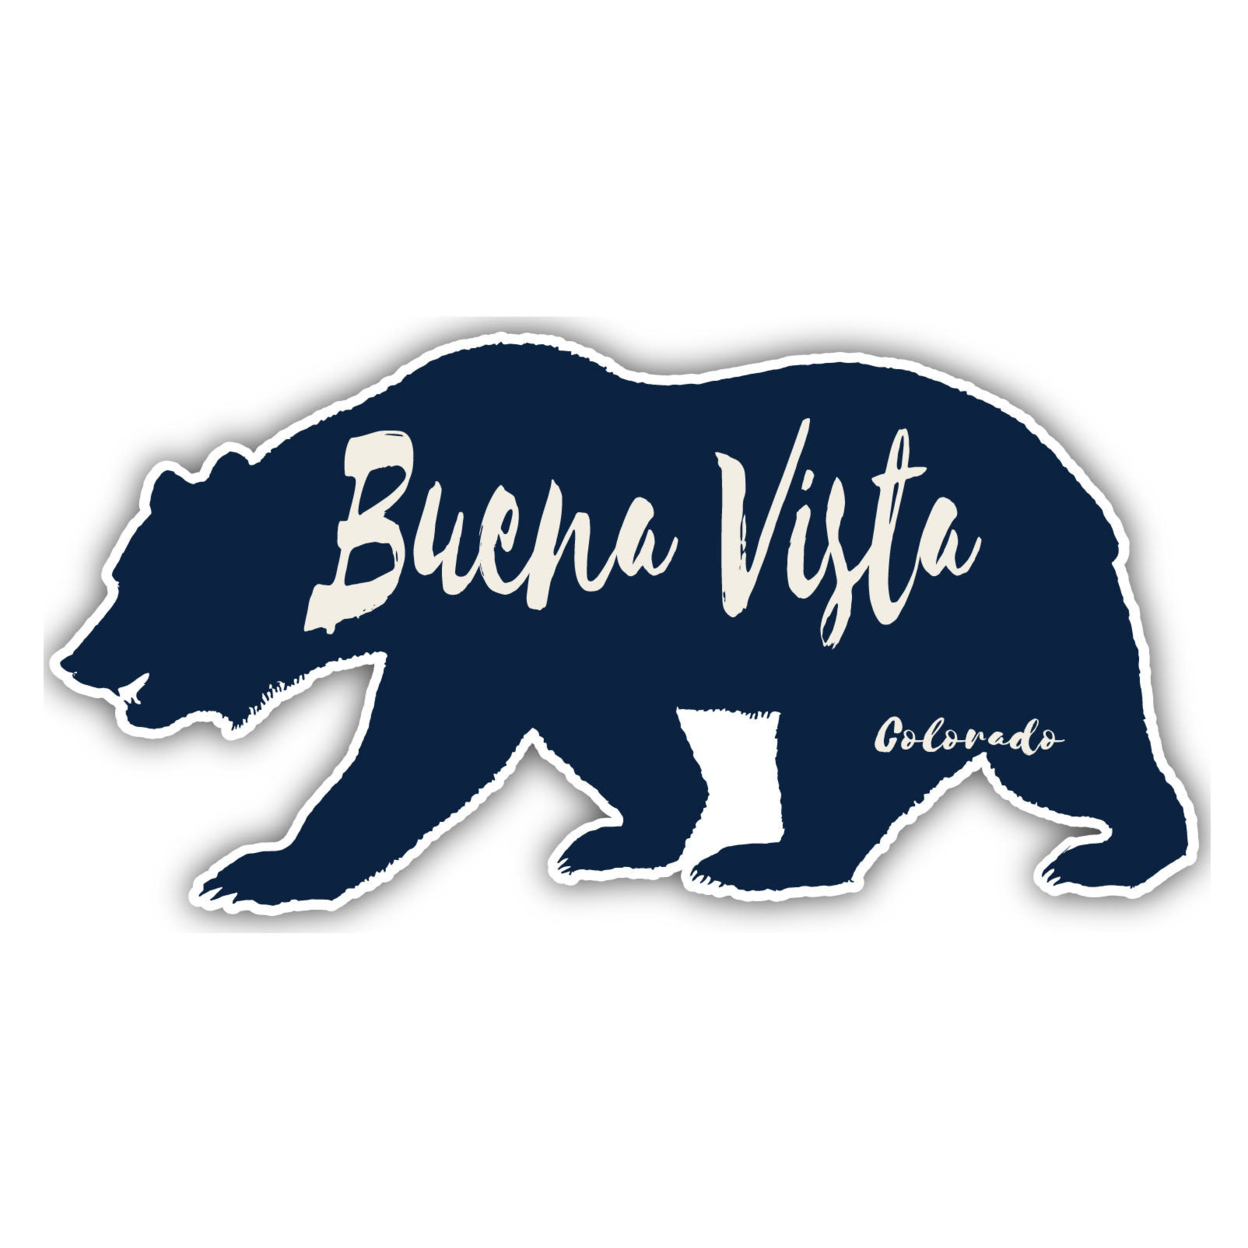 Buena Vista Colorado Souvenir Decorative Stickers (Choose Theme And Size) - Single Unit, 8-Inch, Bear